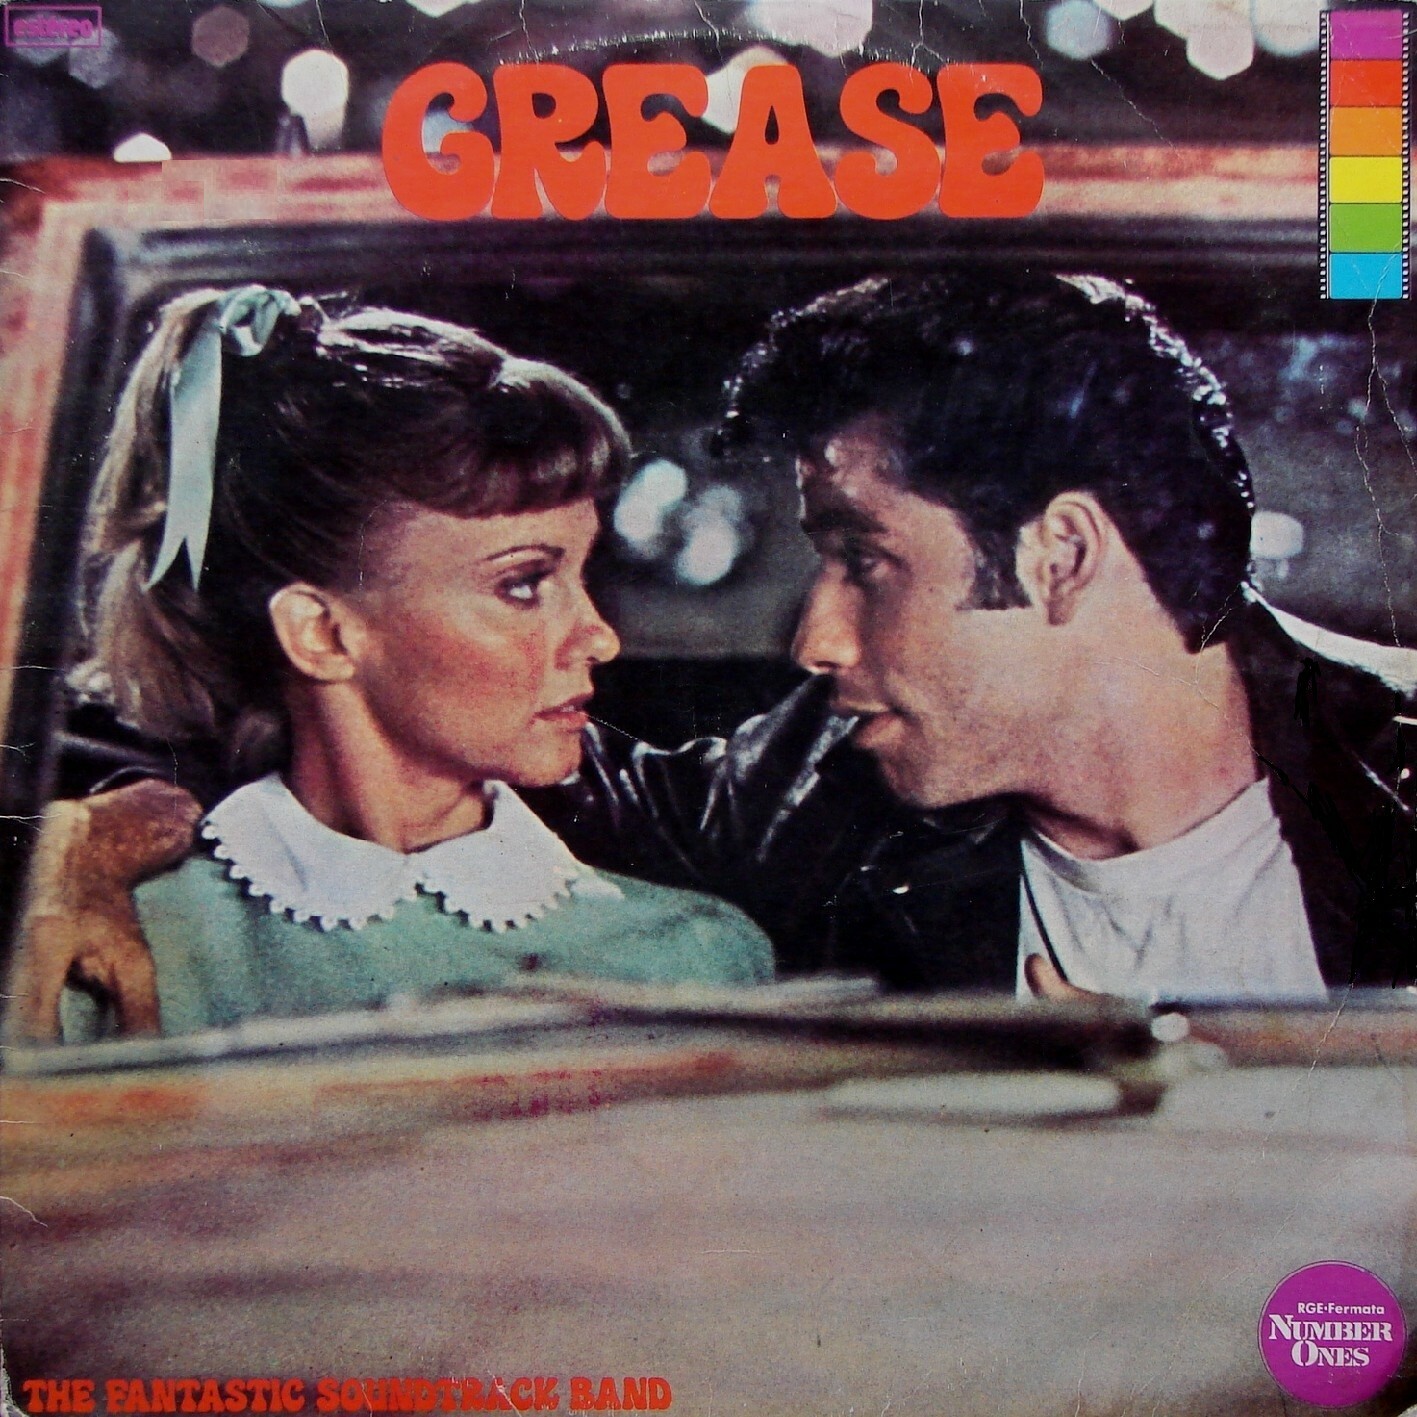 Vinil - Grease - the Fantastic Soundtrack Band